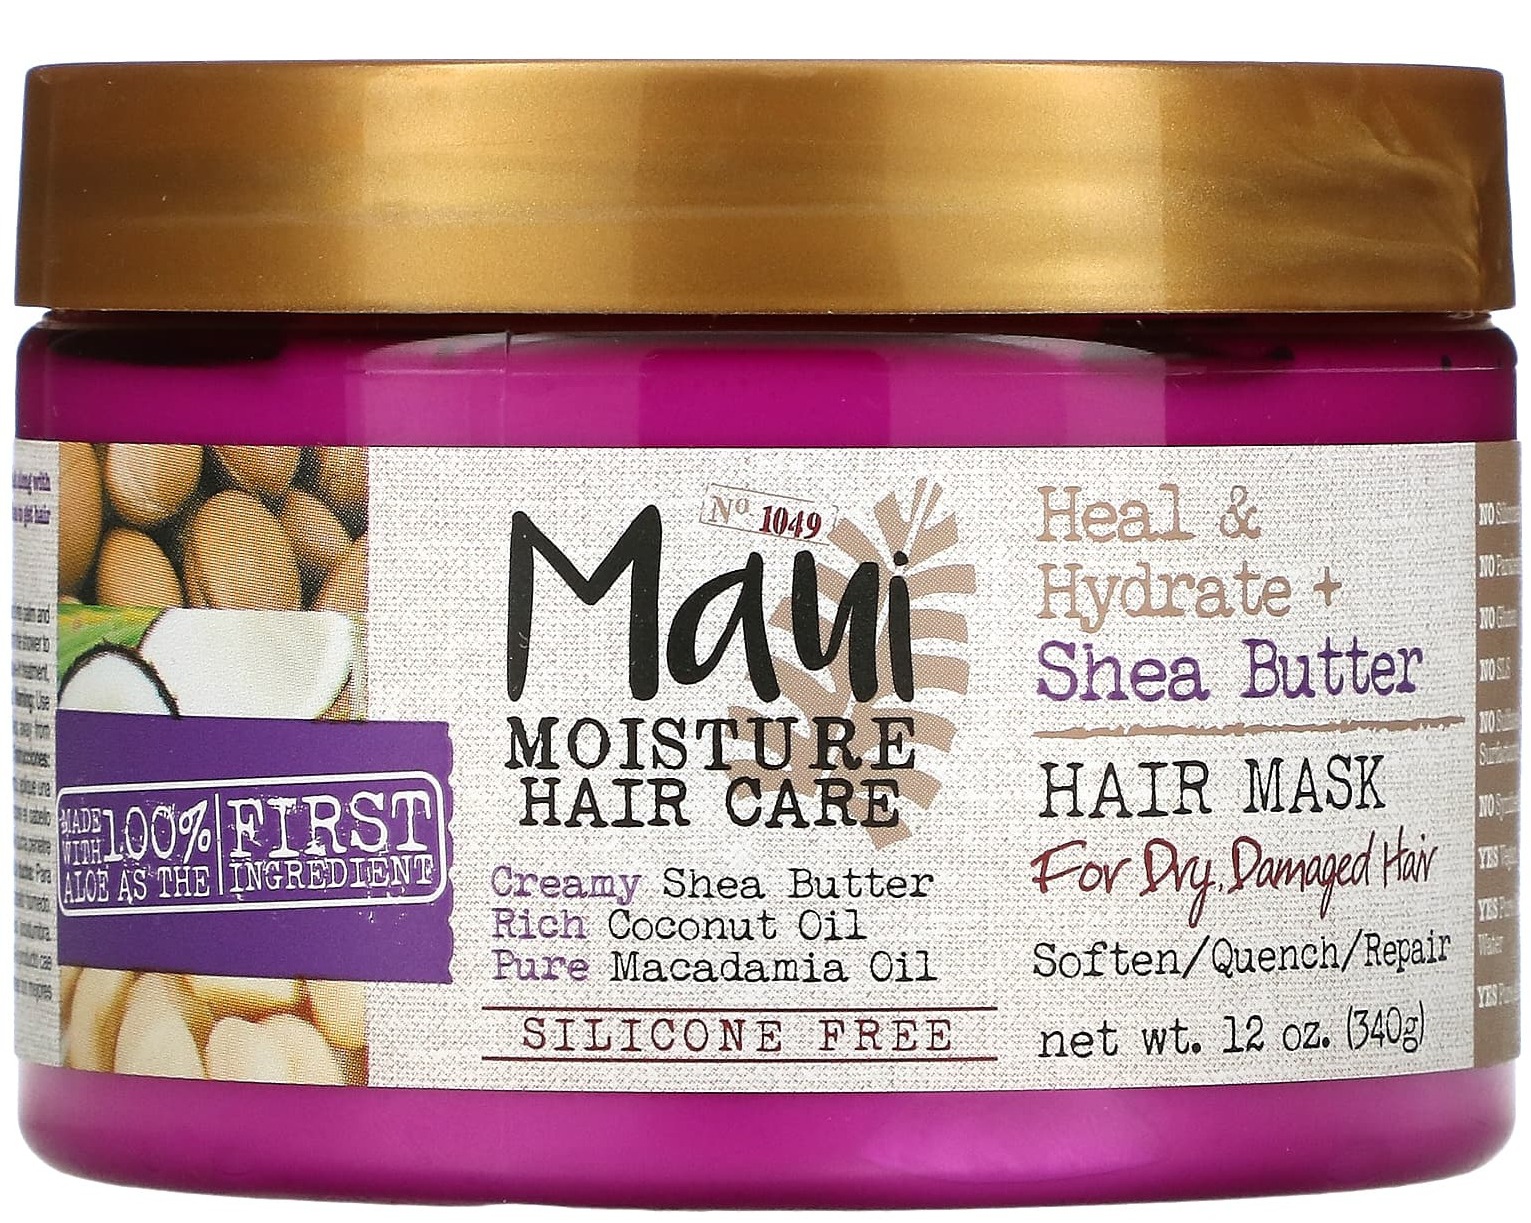 Maui moisture Heal & Hydrate + Shea Butter Hair Mask